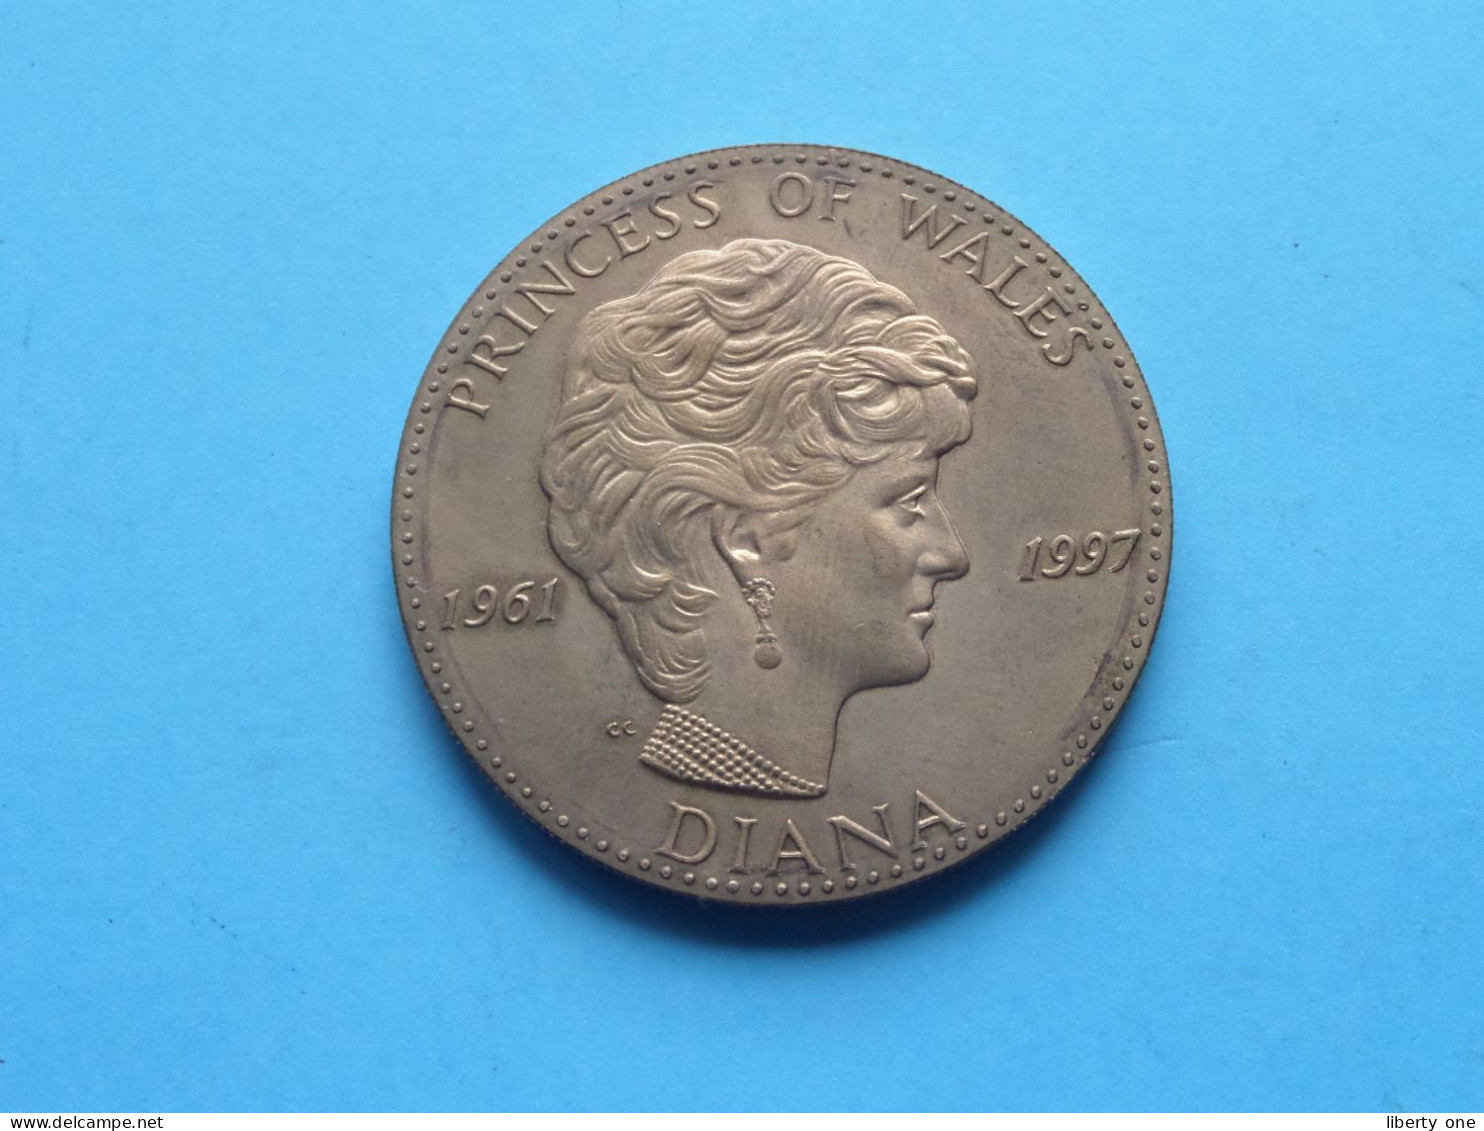 LADY DI - Diana Princess Of Wales 1997 ( See SCANS ) 33 Gr. / 41 Mm. ( Bronze ) 1961-1997 DIANA ( Belgium Coin ) ! - Monete Allungate (penny Souvenirs)